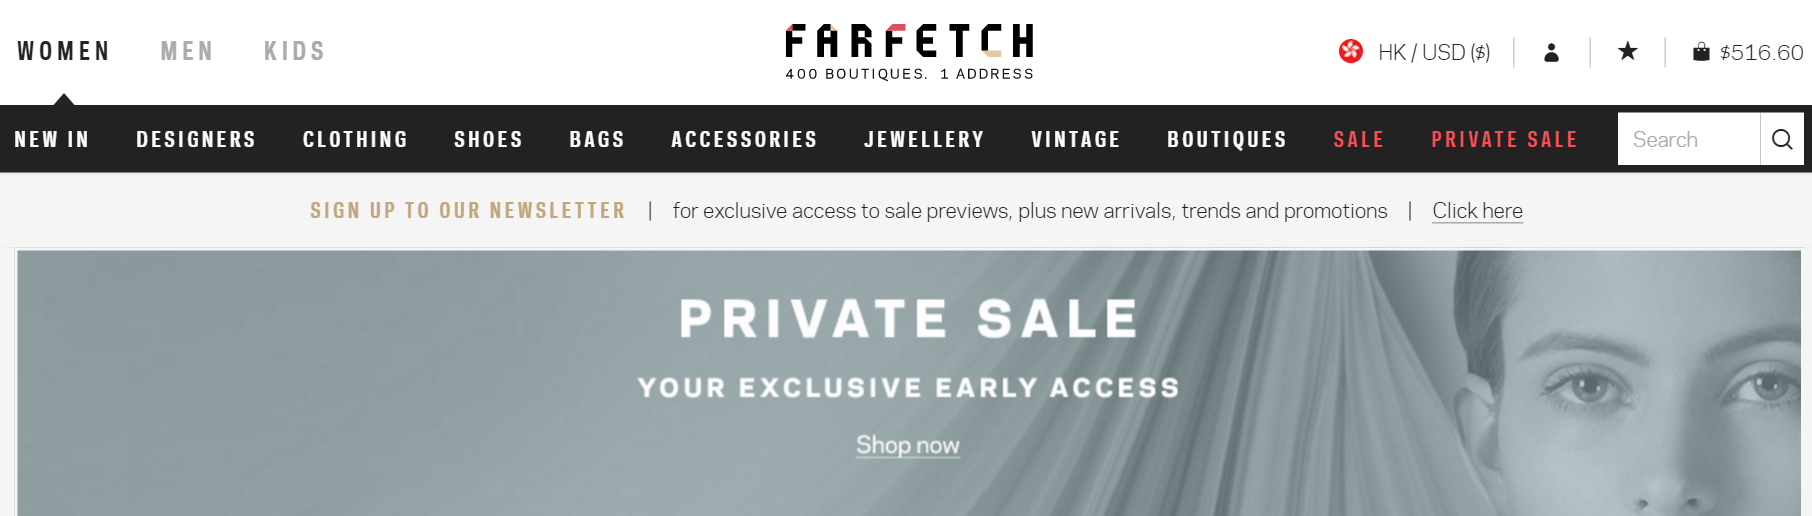 farfetch.com   a new way to shop for fashion